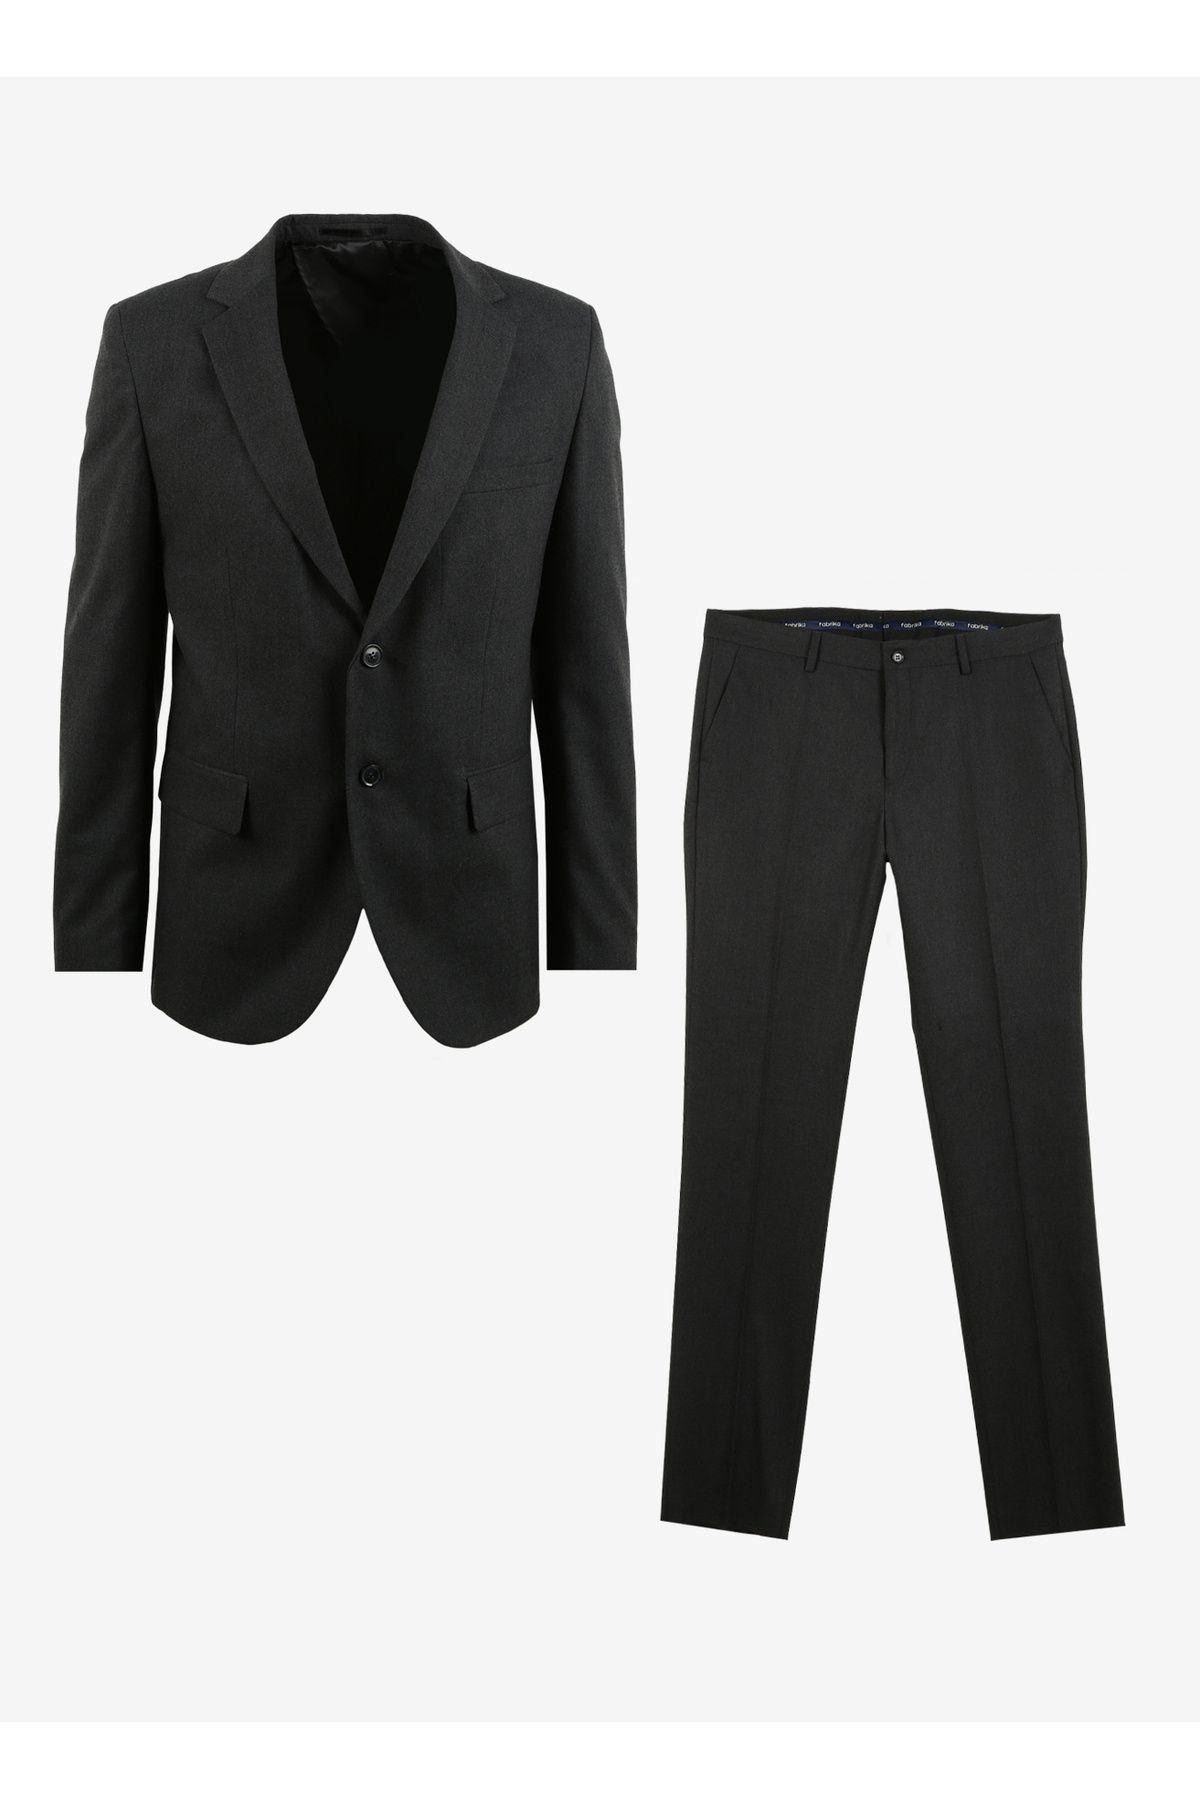 Fabrika Normal Bel Basic Antrasit Erkek Takım Elbise F3WM-TKM 501